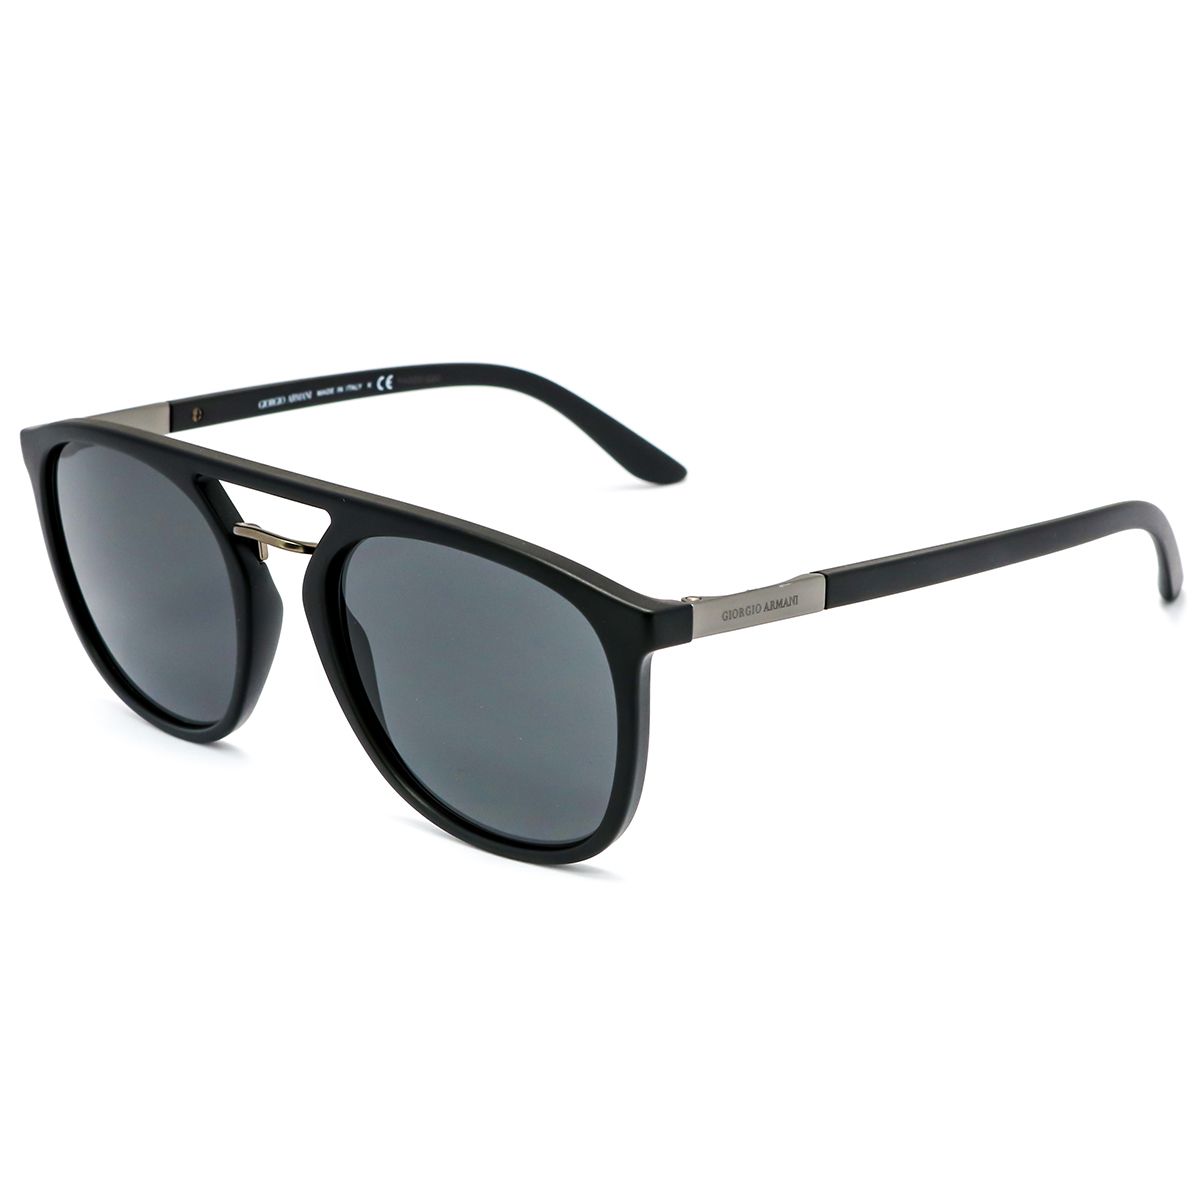 AR8118 Panthos Sunglasses 5001 87 - size 53